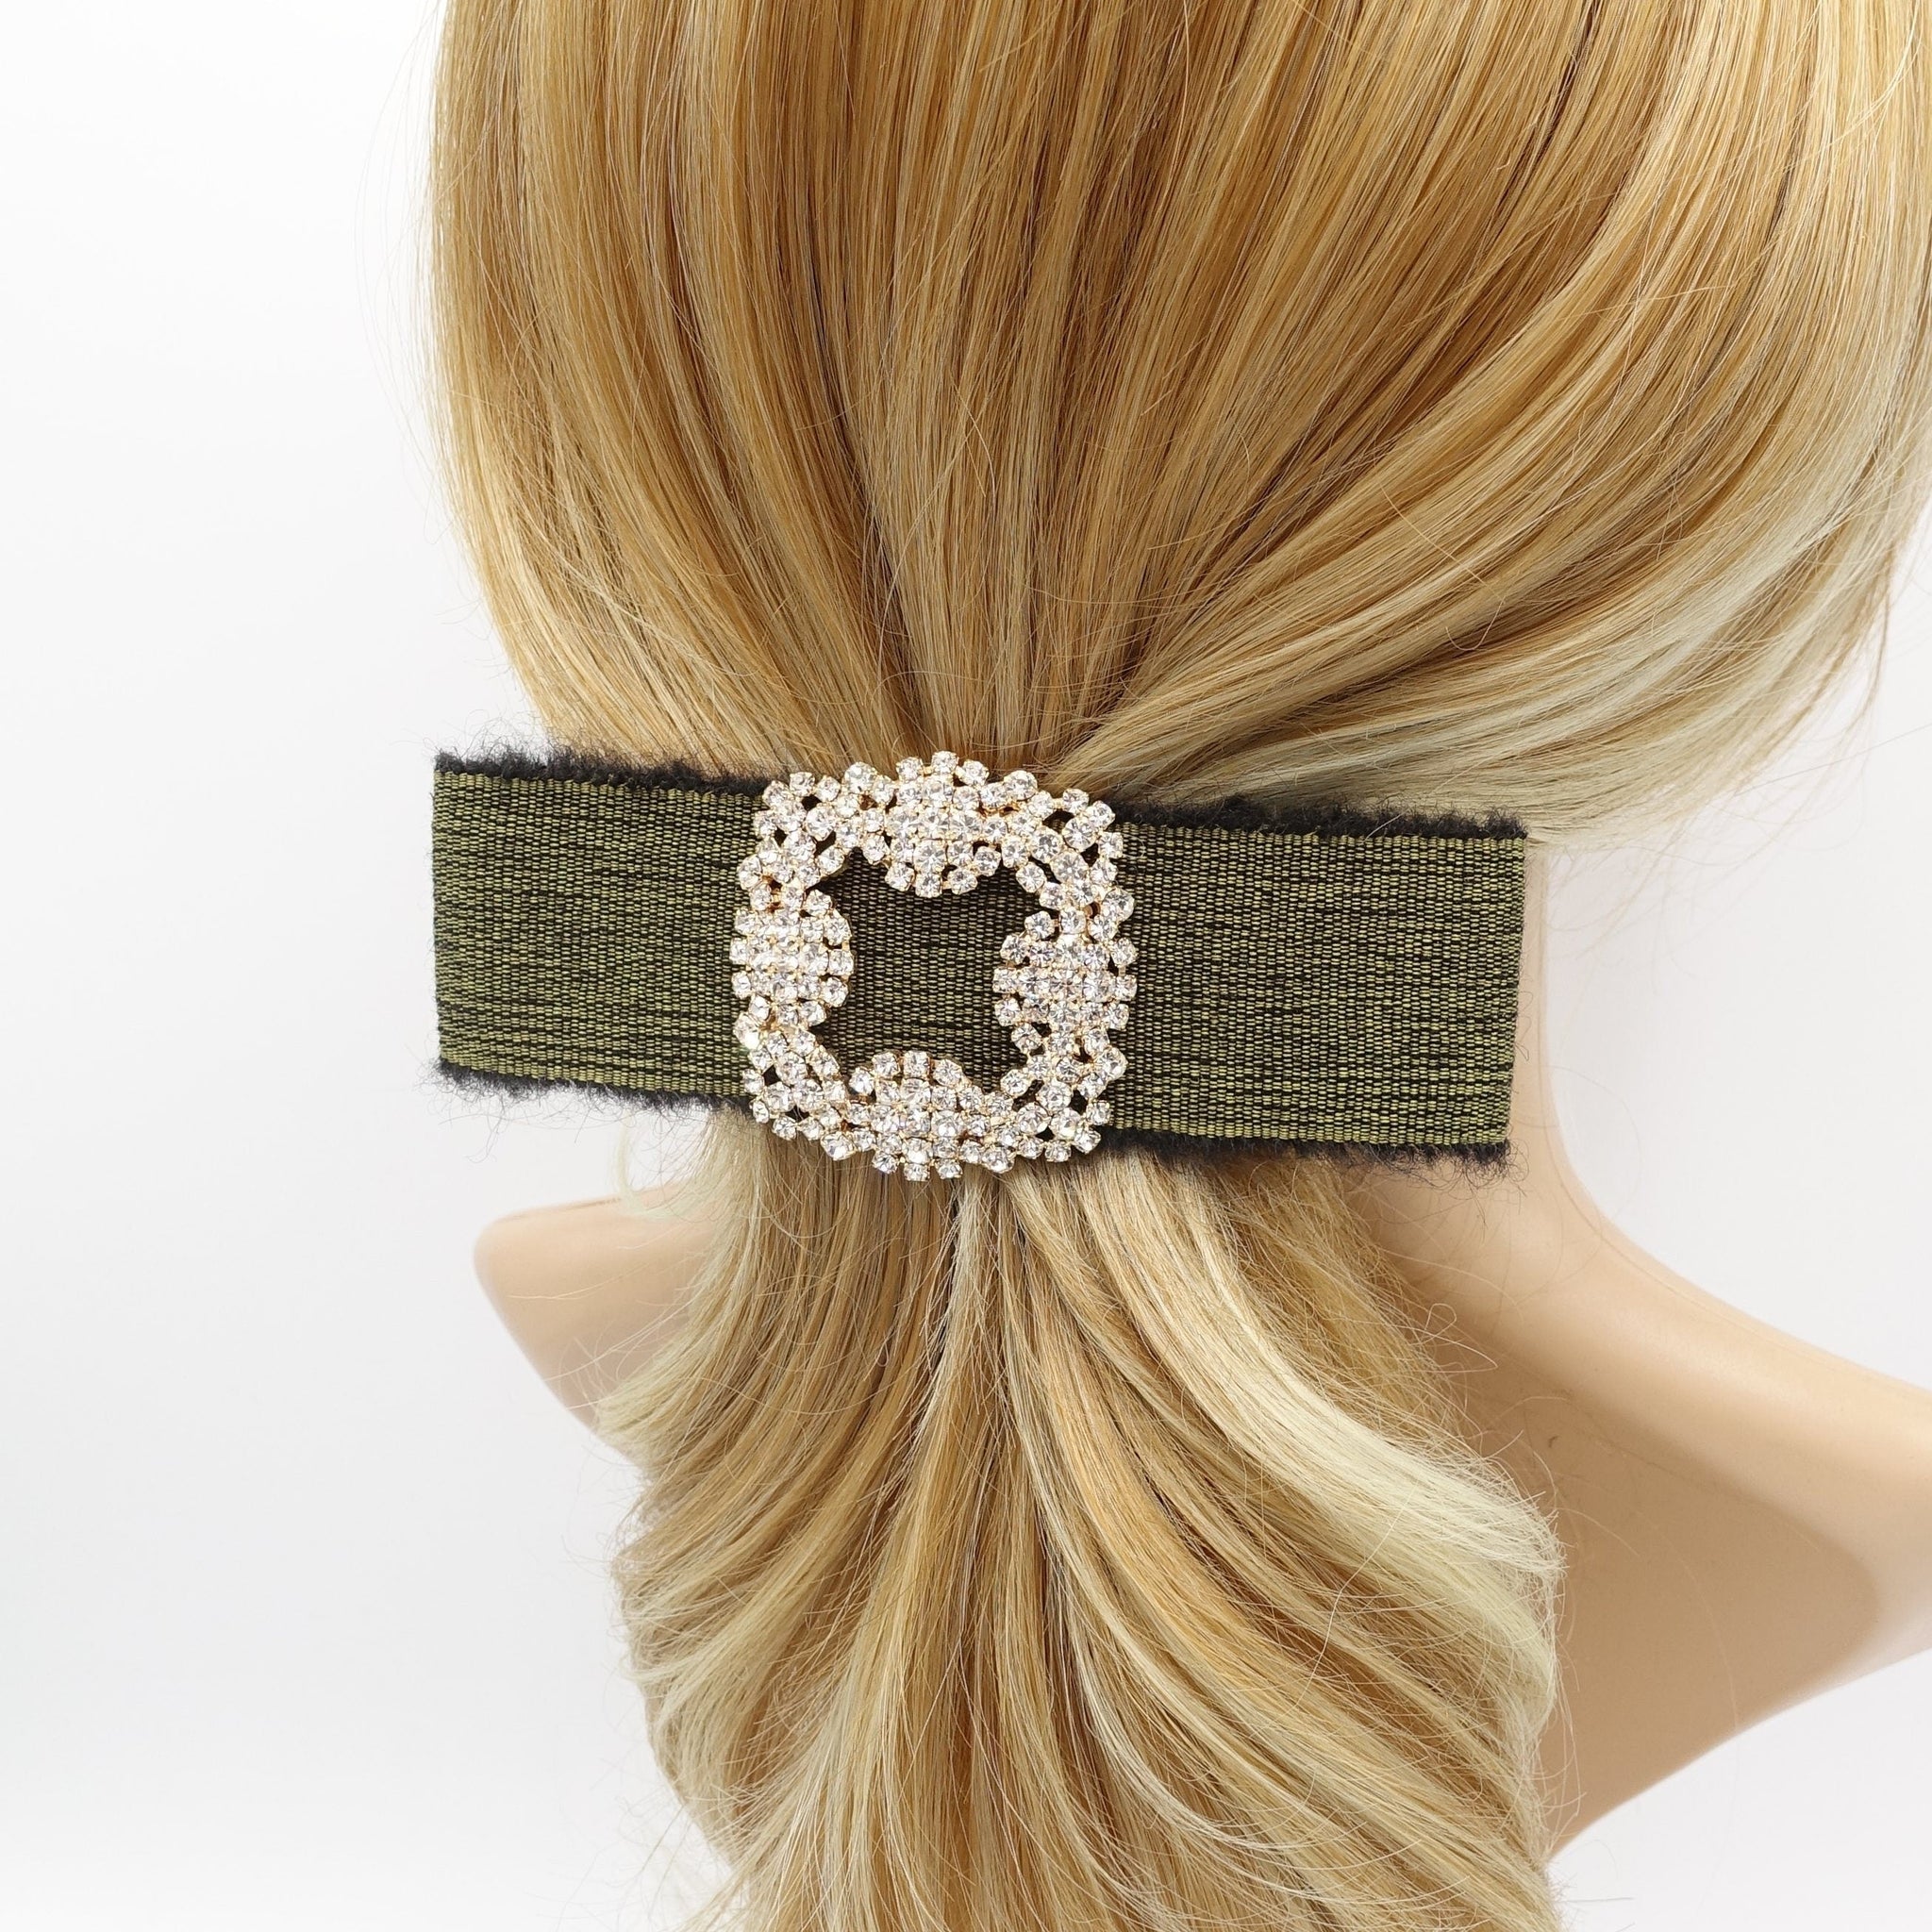 veryshine.com Barrette (Bow) Khaki classical fabric hair bow bling buckle frayed trim hair accessory for women